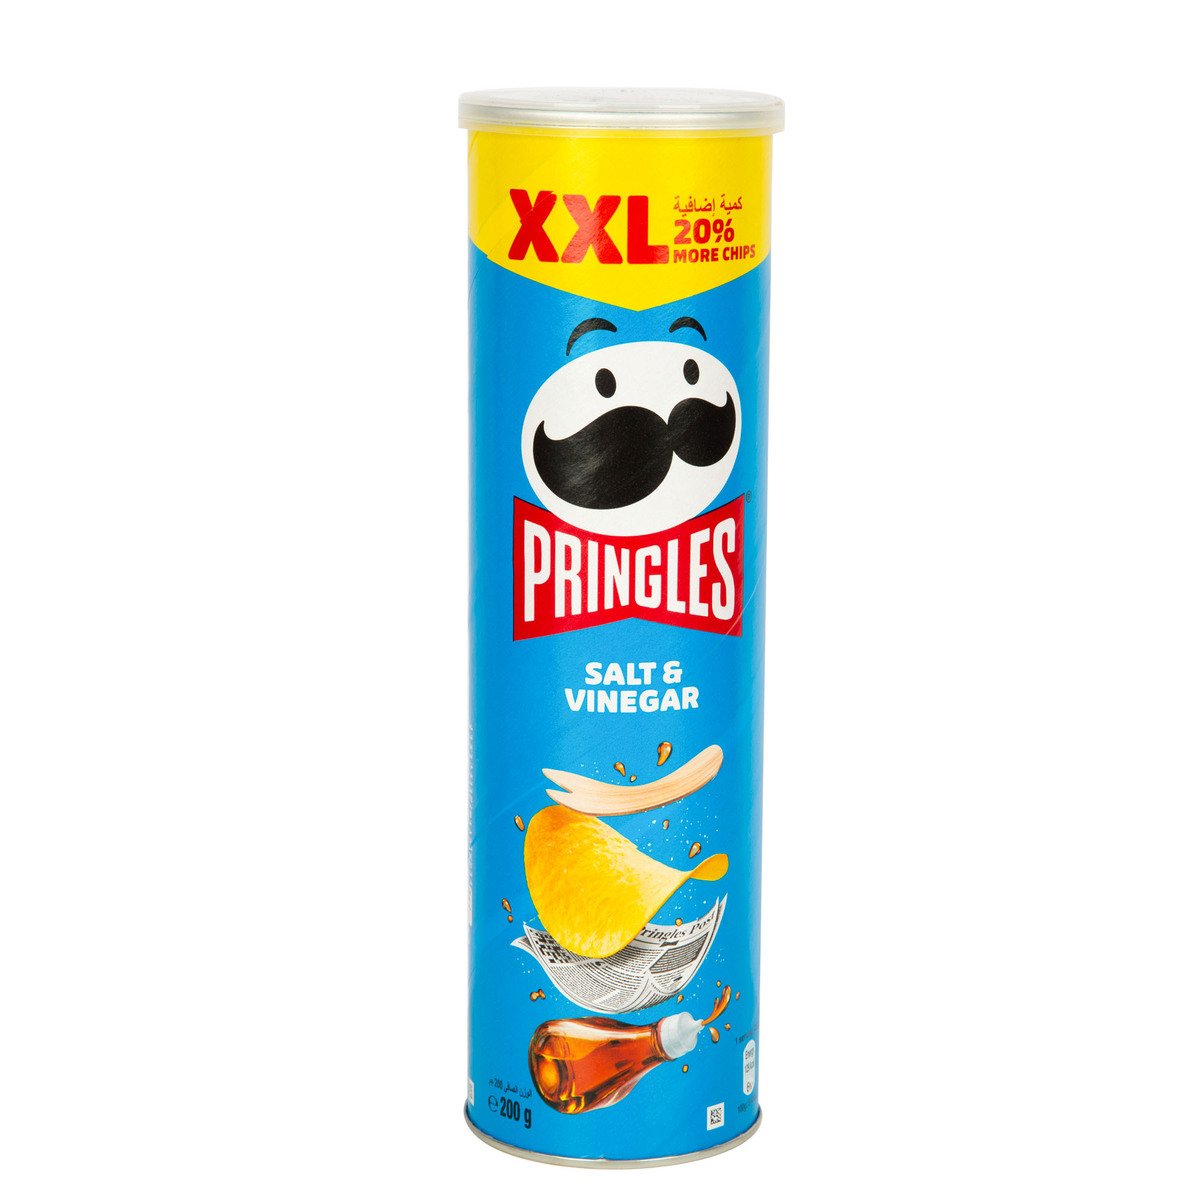 Pringles XXL Salt And Vinegar Flavoured Chips 200 g